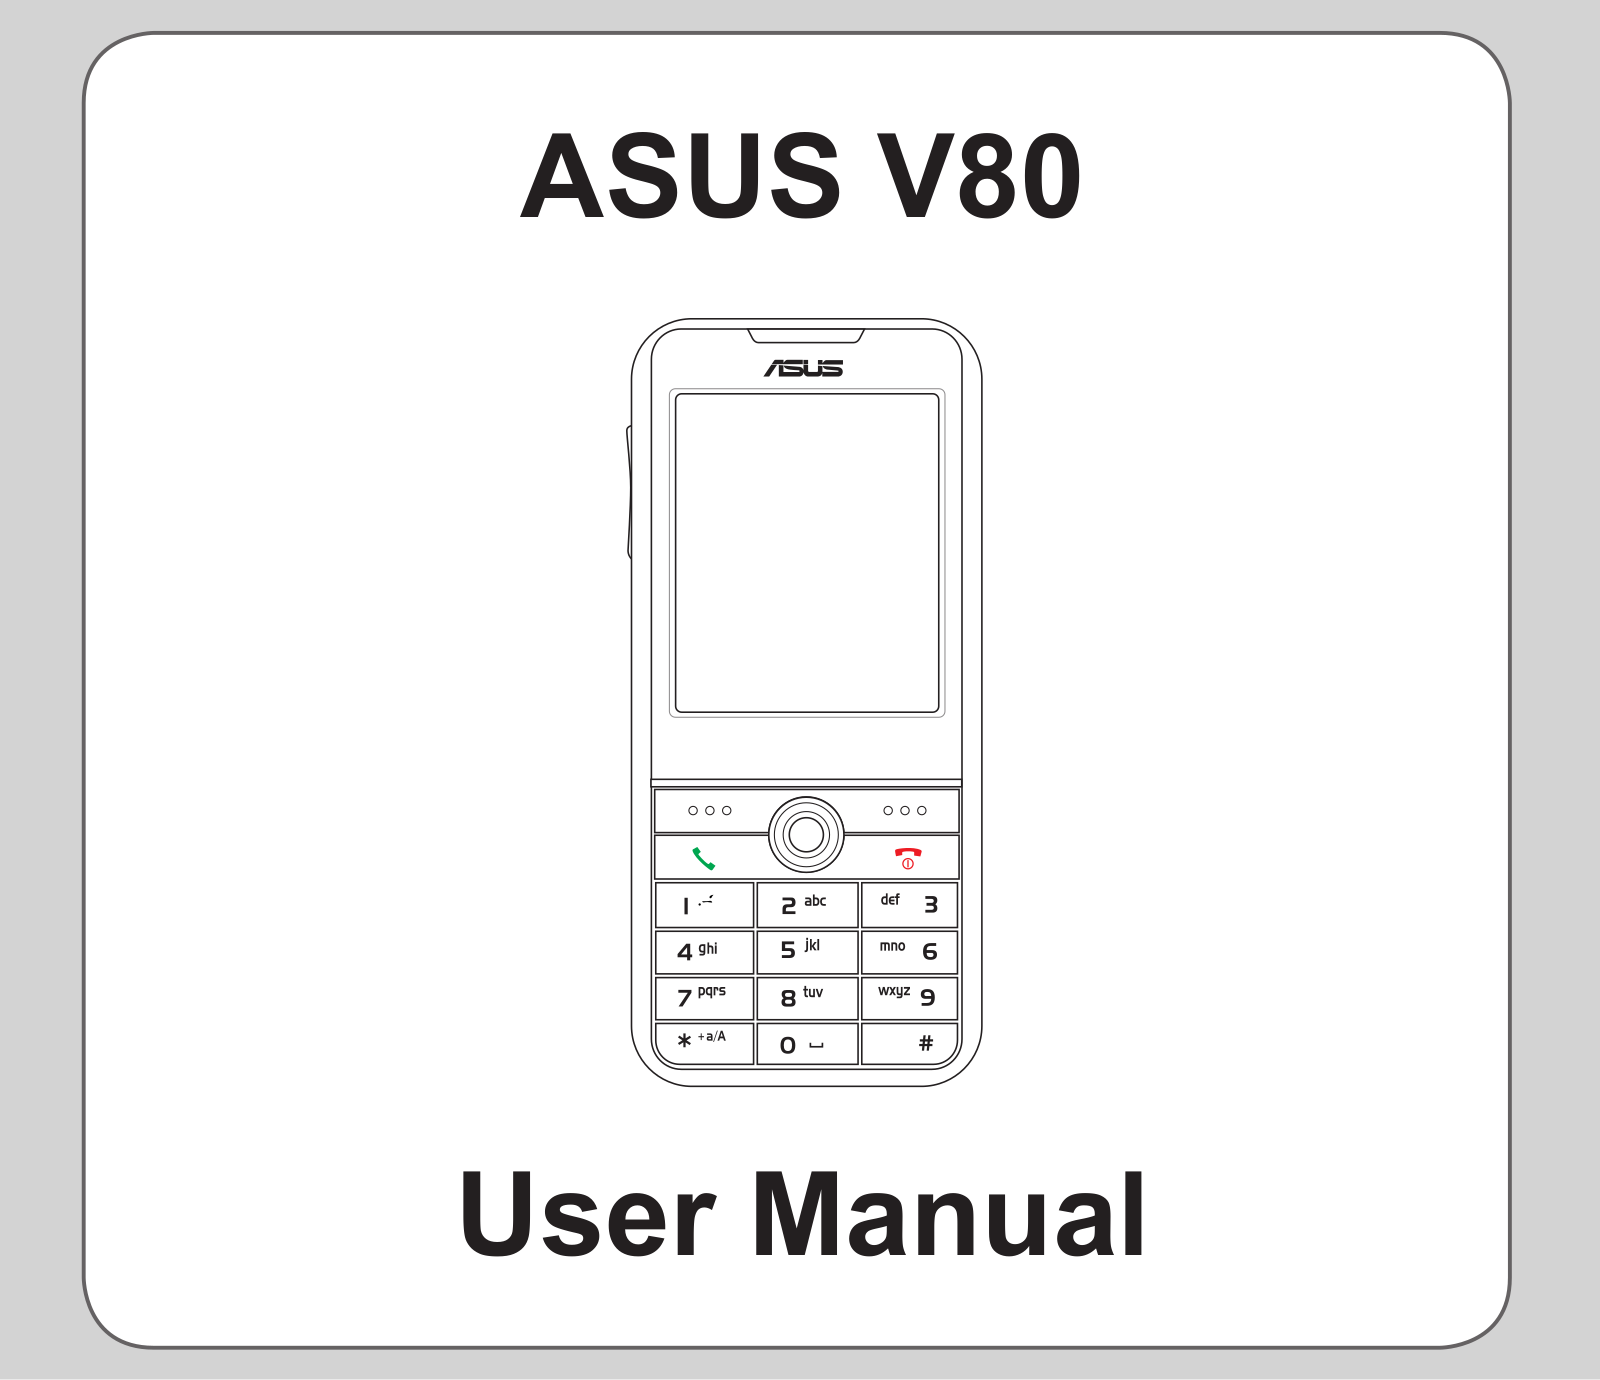 ASUS V80 User Manual